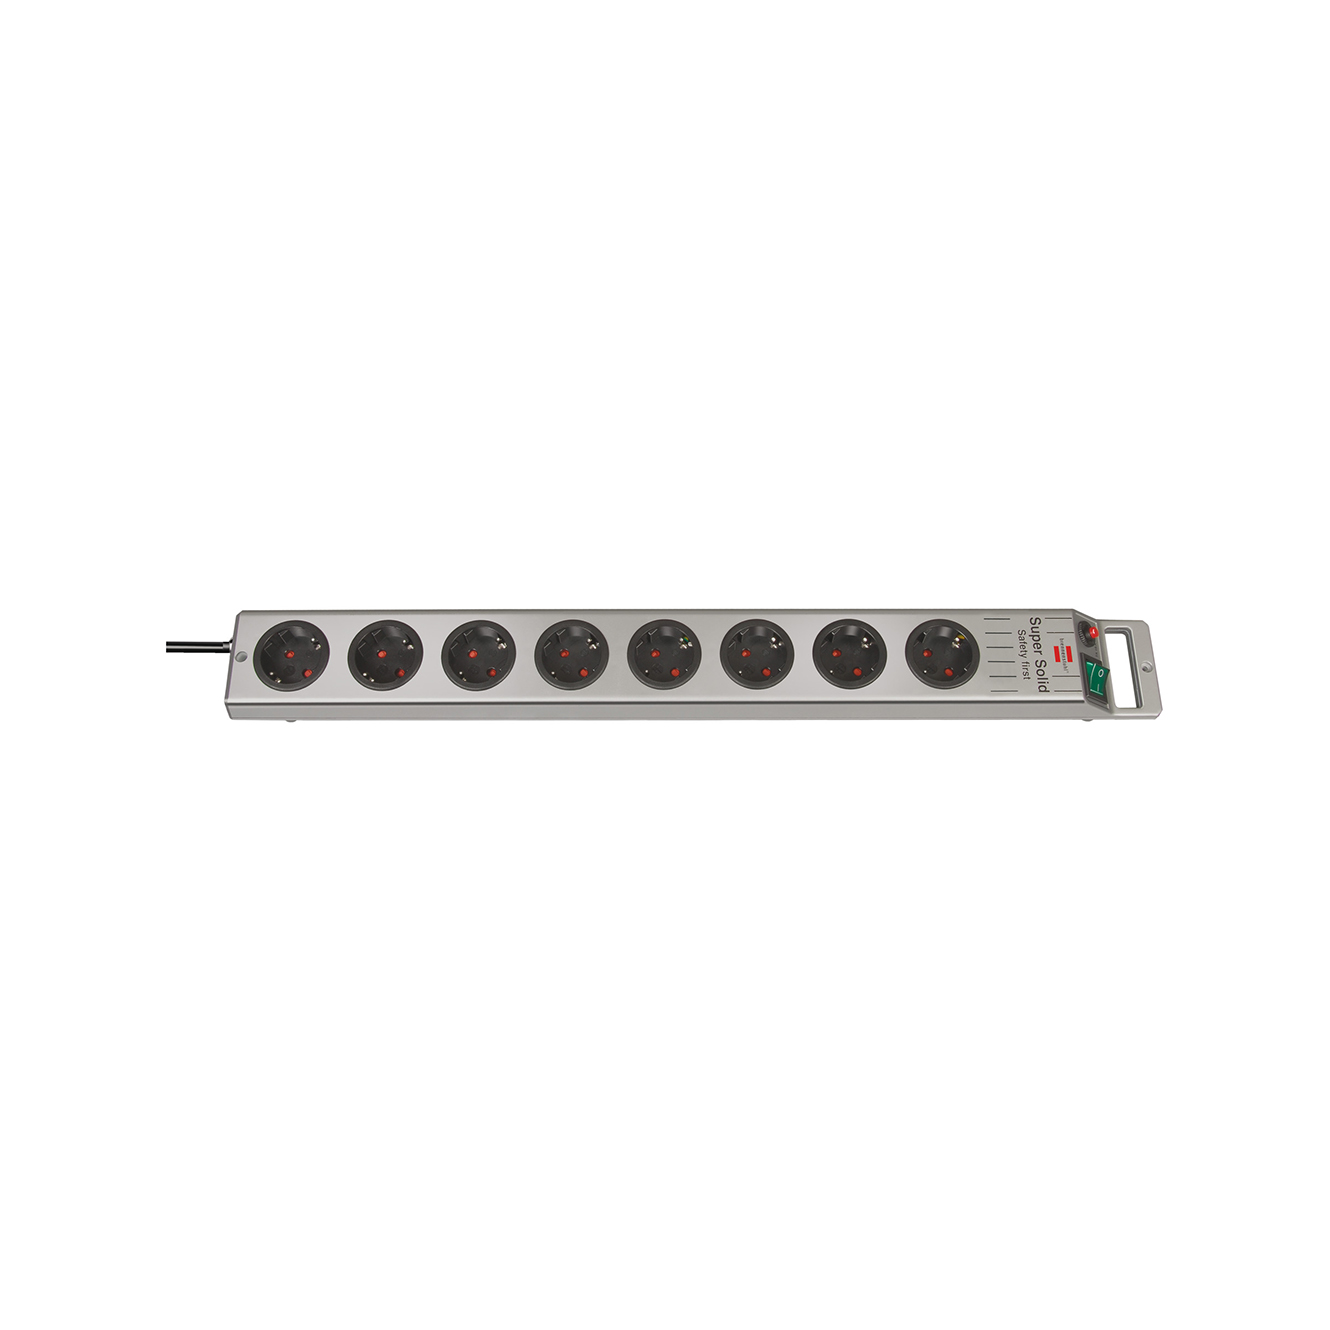 Удлинитель Brennenstuhl Super-Solid-Line 8 розеток кабель 2,5 м H05VV-F 3G1,5 серый 1153340118